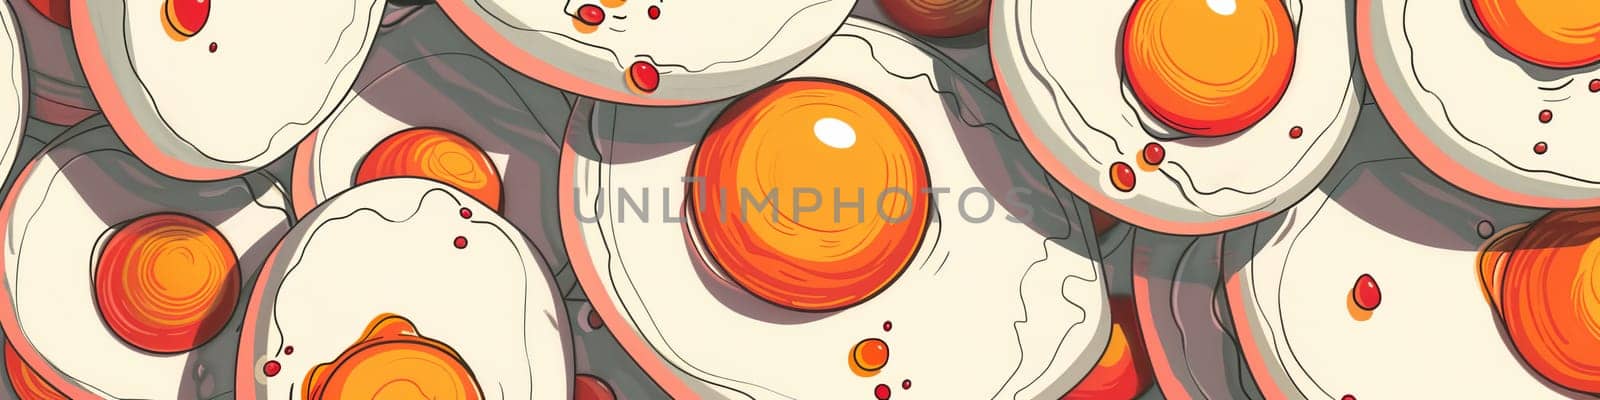 Cartoon bulls eye egg as background or texture by Kadula